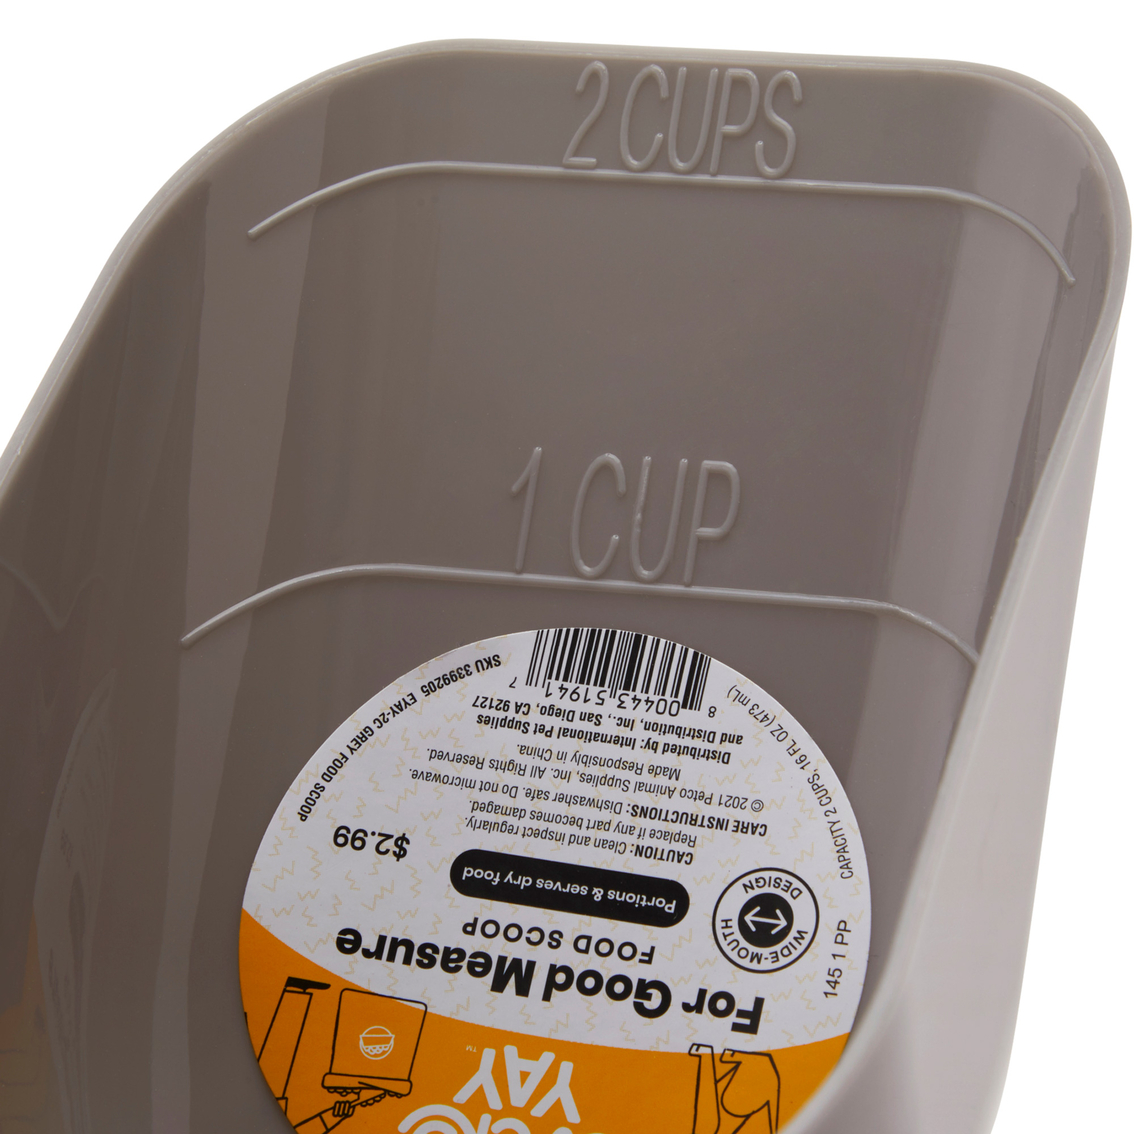 EveryYay For Good Measure Grey Food Scoop 2 Cups - Image 4 of 4